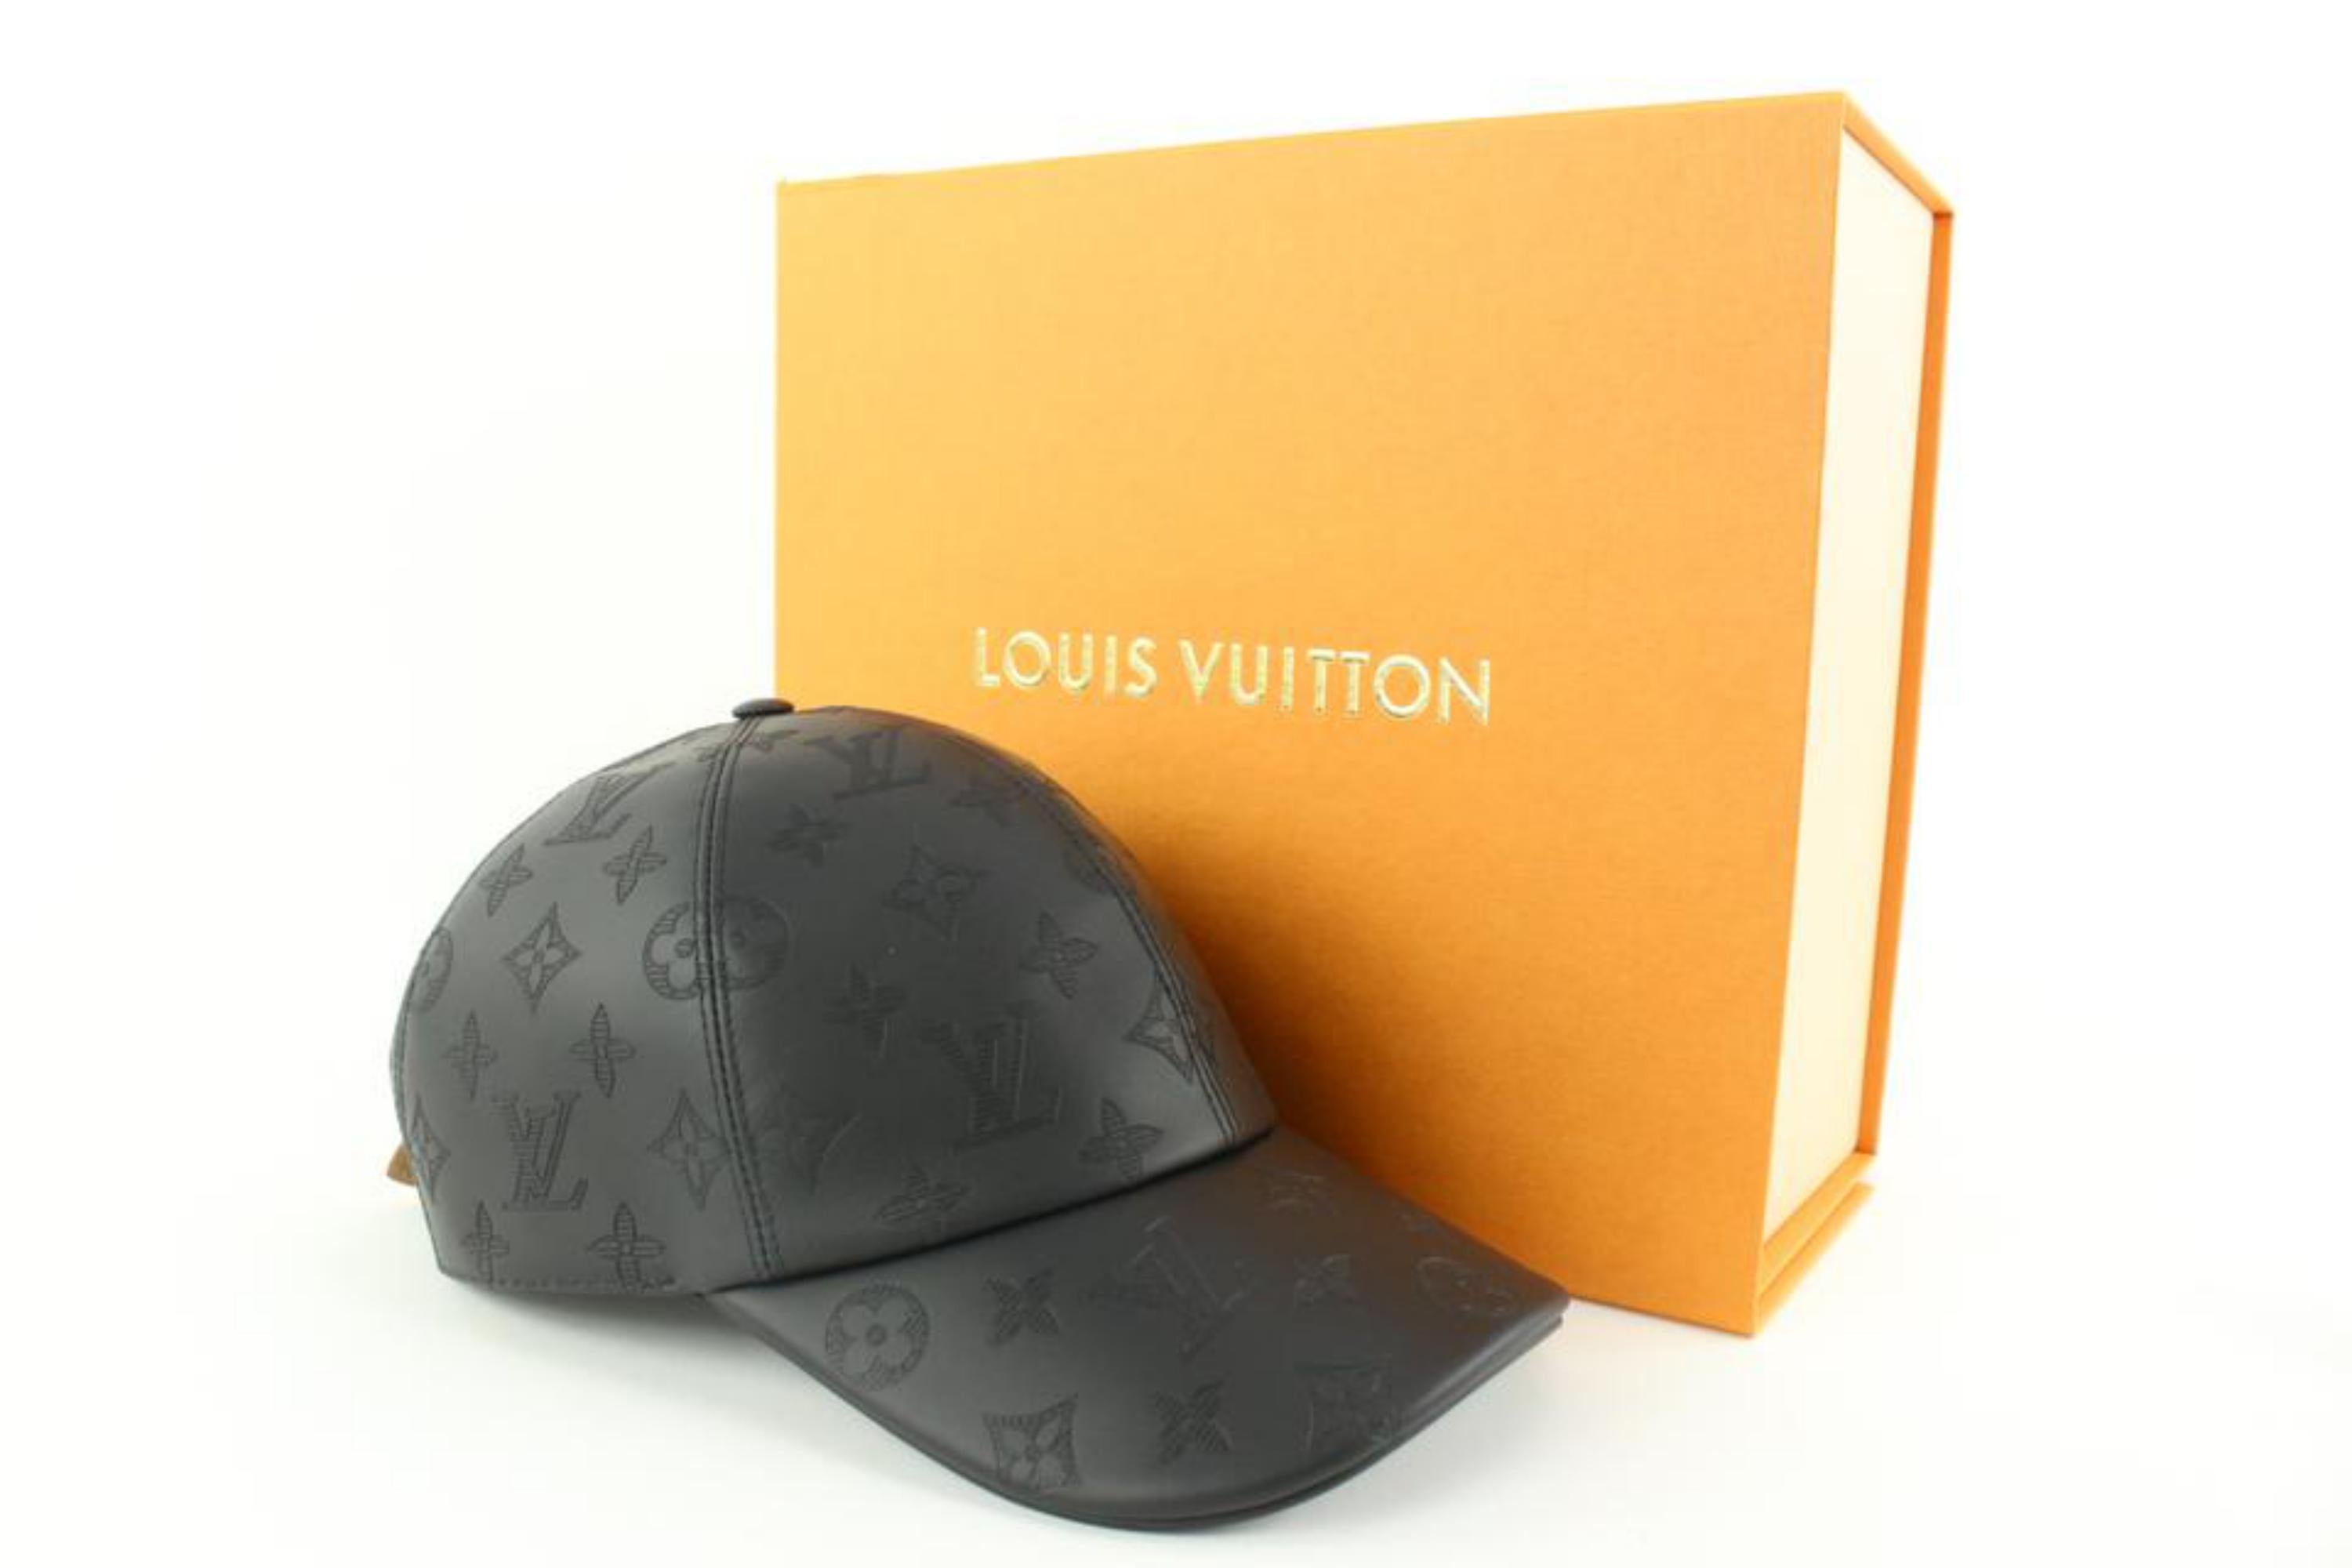 Louis Vuitton Black Leather Monogram Shadow Baseball Cap Hat 1231lv10 6